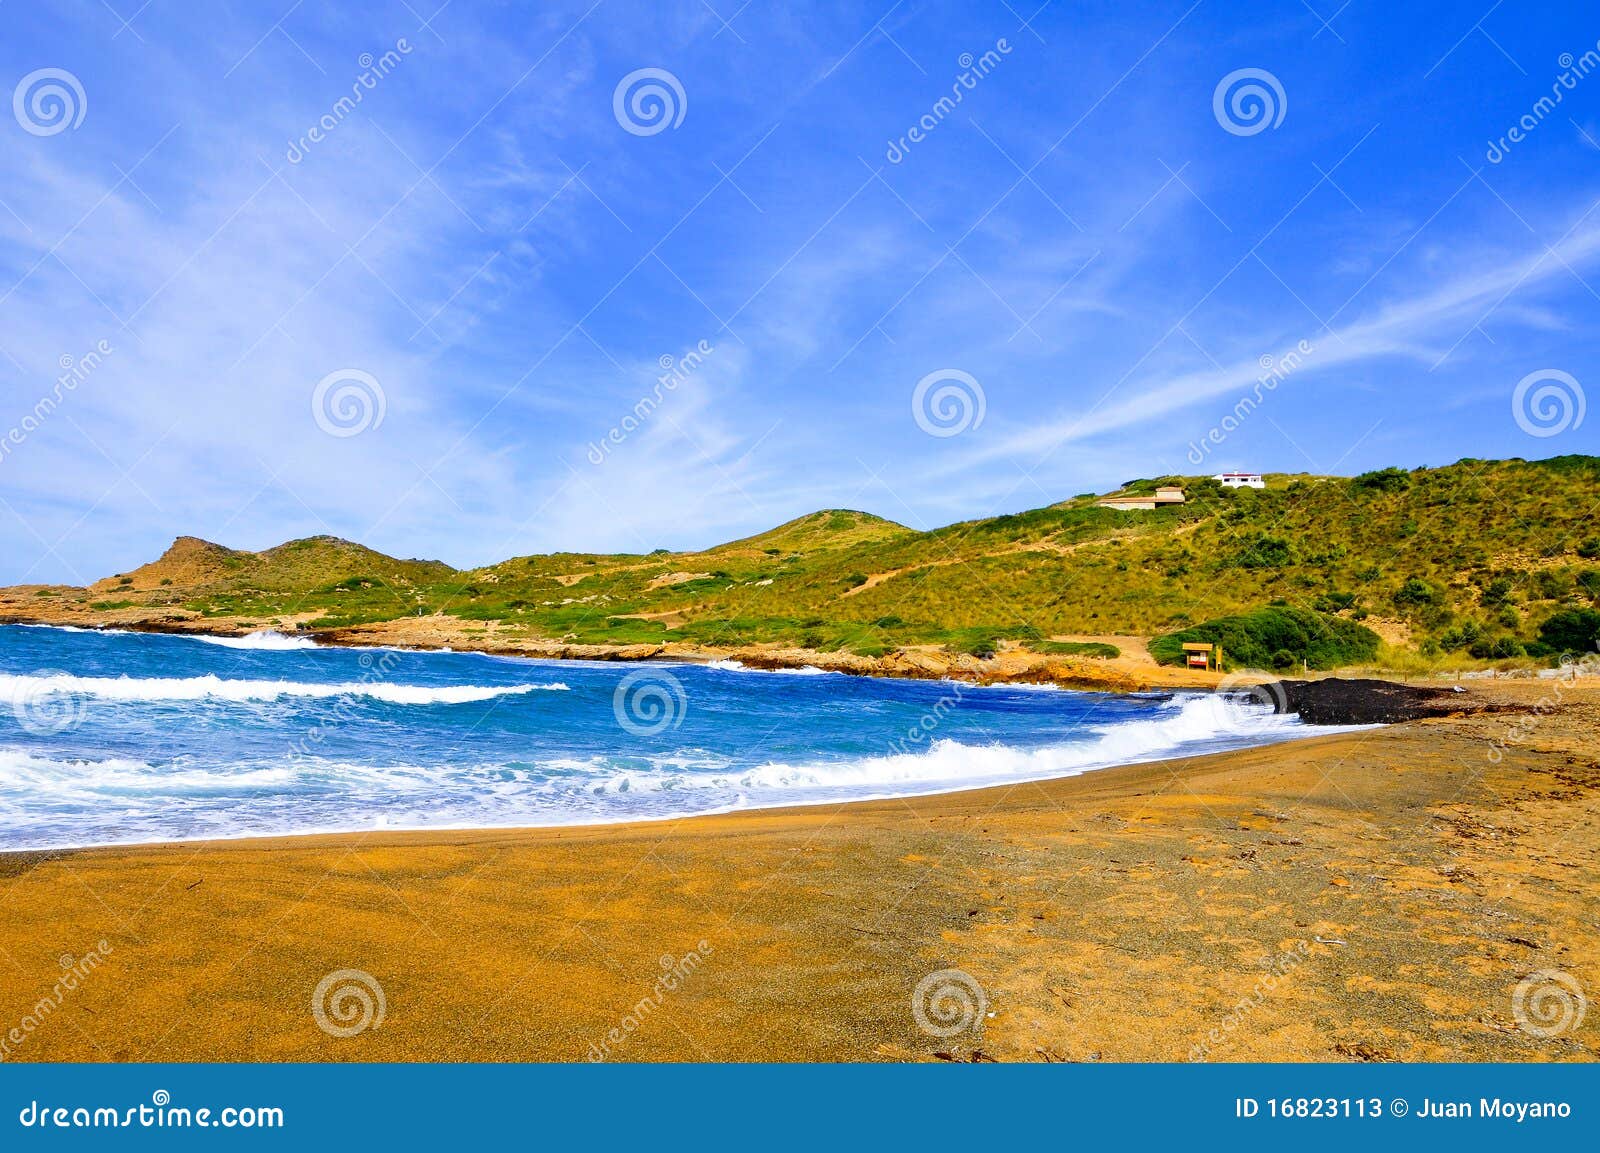 binimela beach in menorca balearic islands, spain